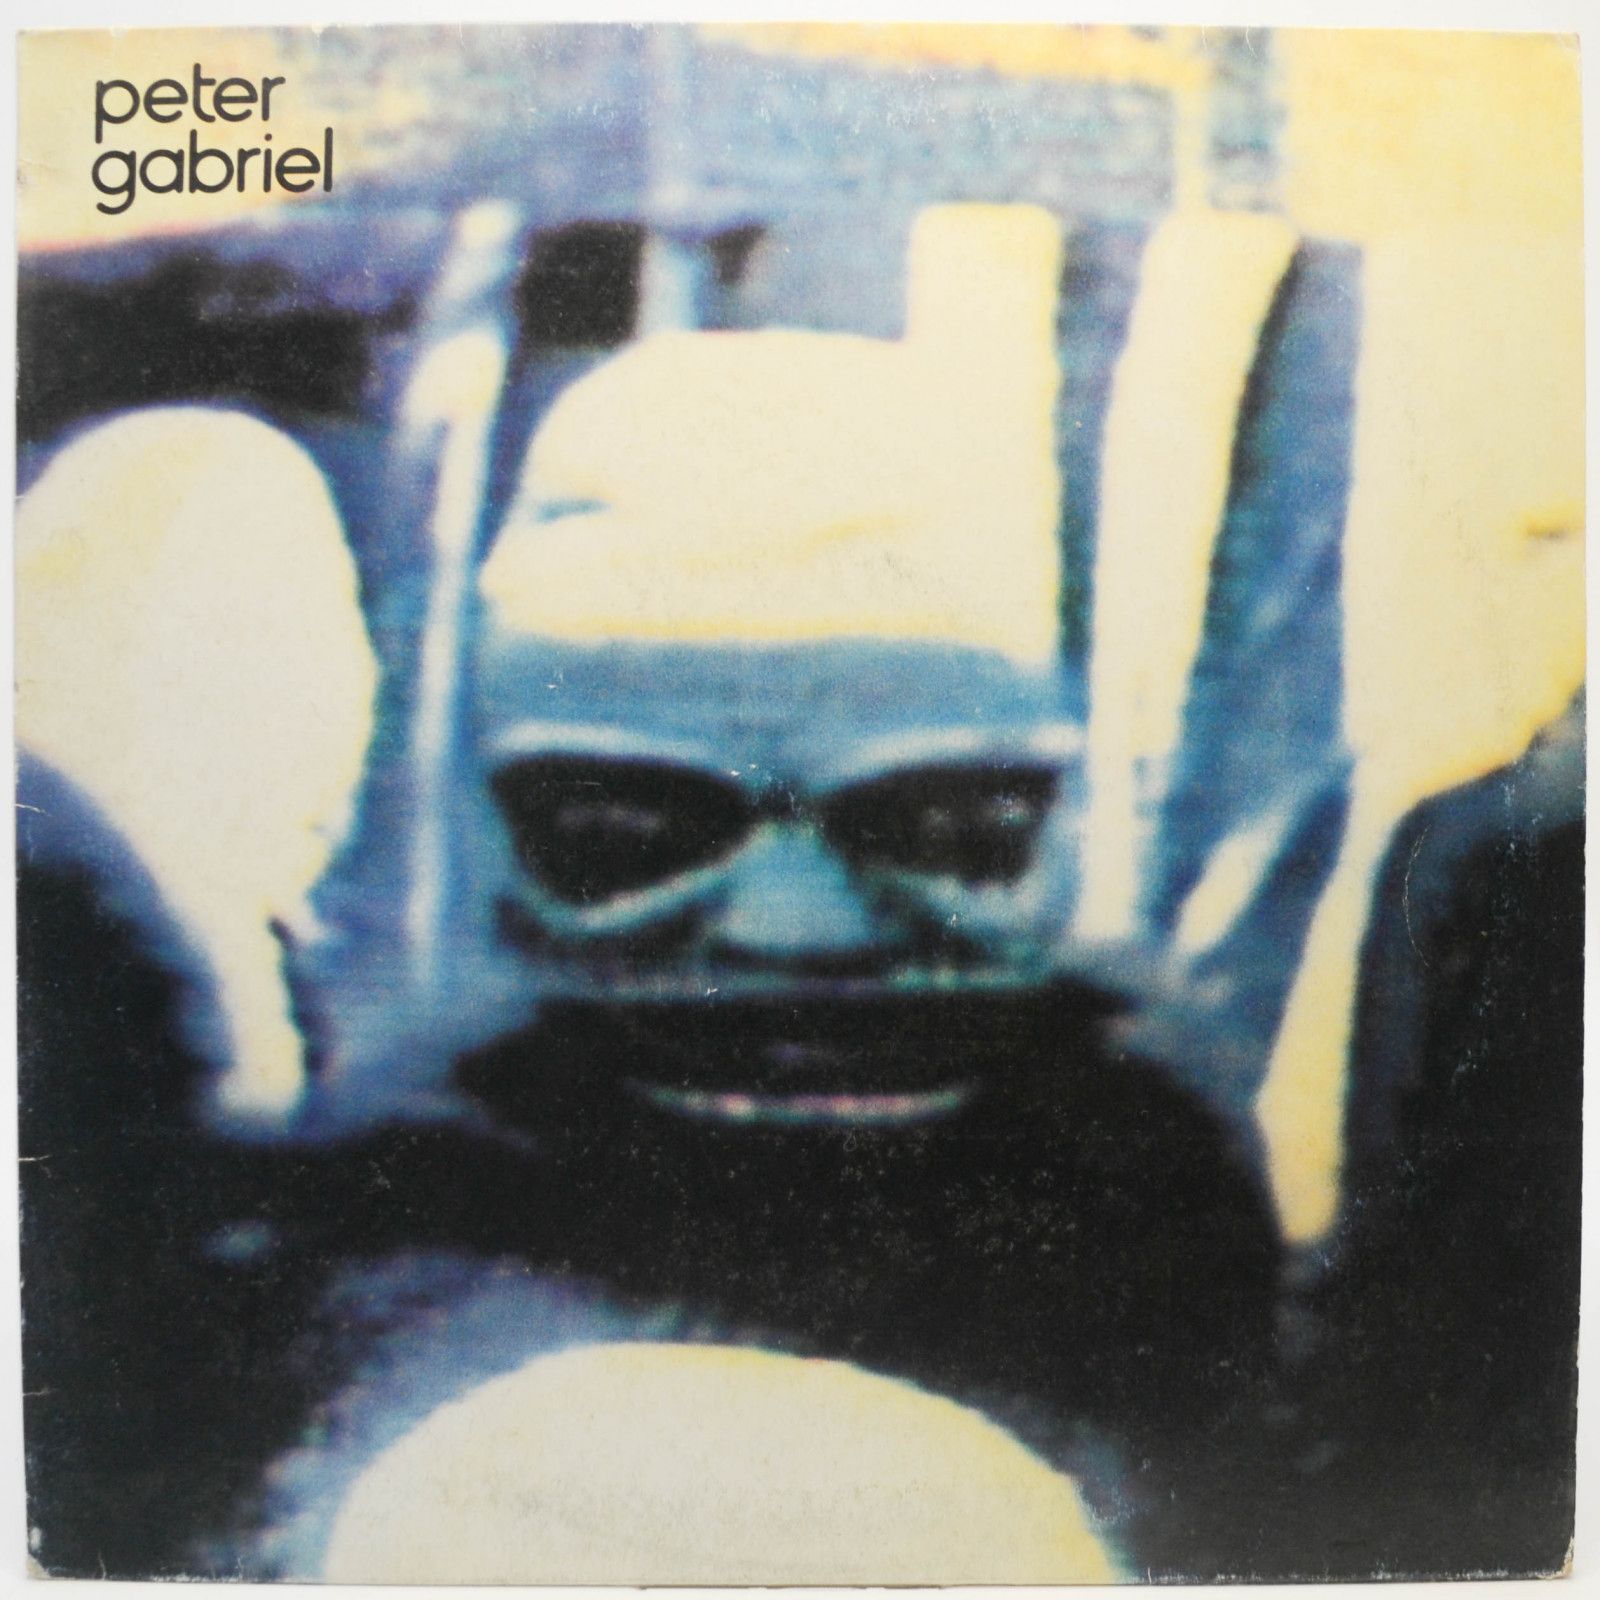 Peter Gabriel — IV, 1982